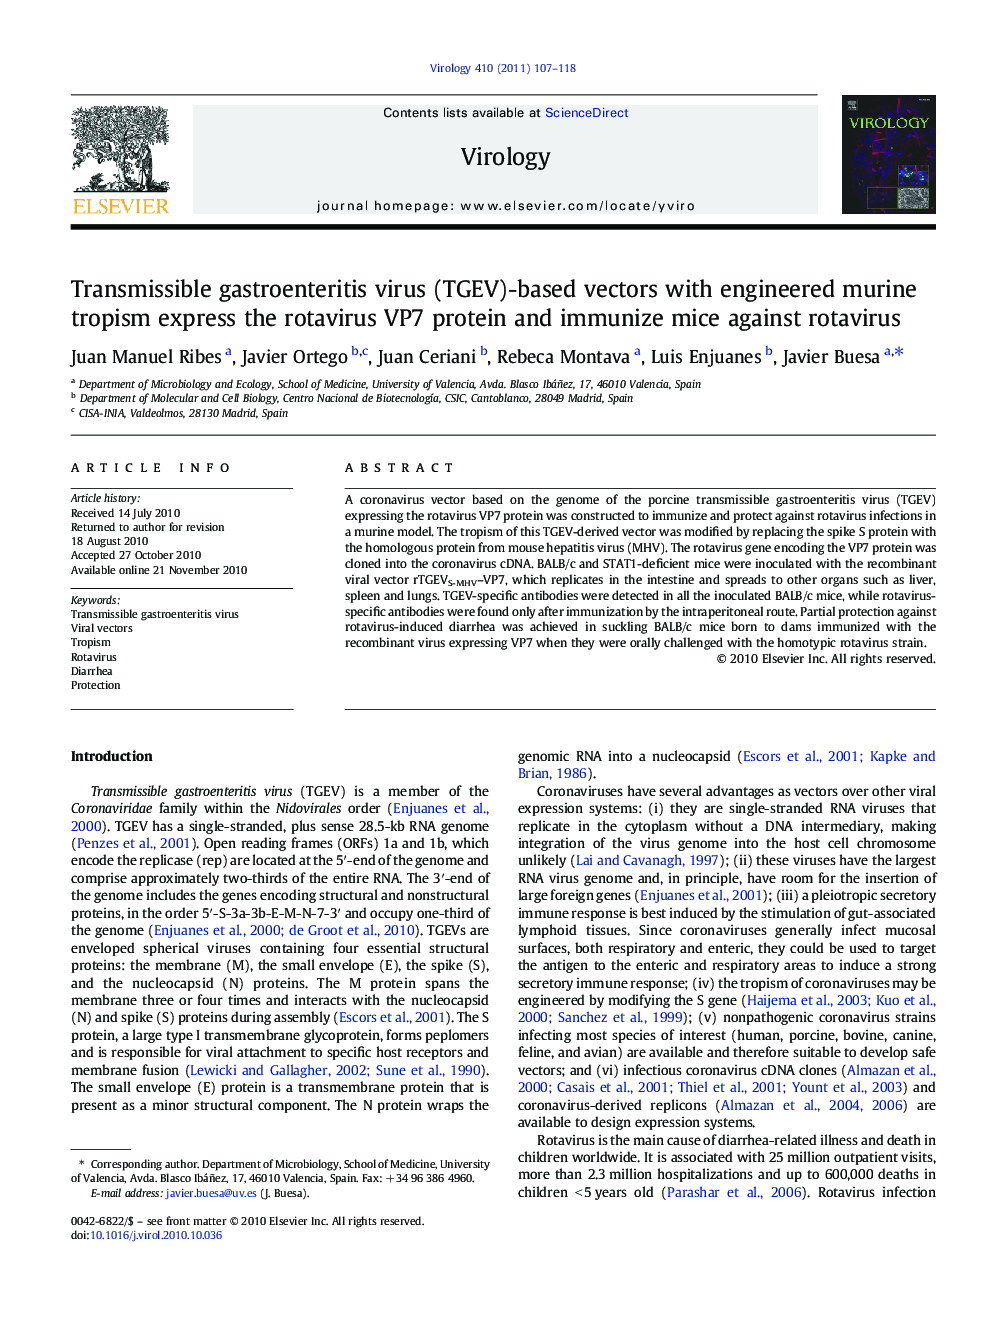 Transmissible gastroenteritis virus (TGEV)-based vectors with engineered murine tropism express the rotavirus VP7 protein and immunize mice against rotavirus